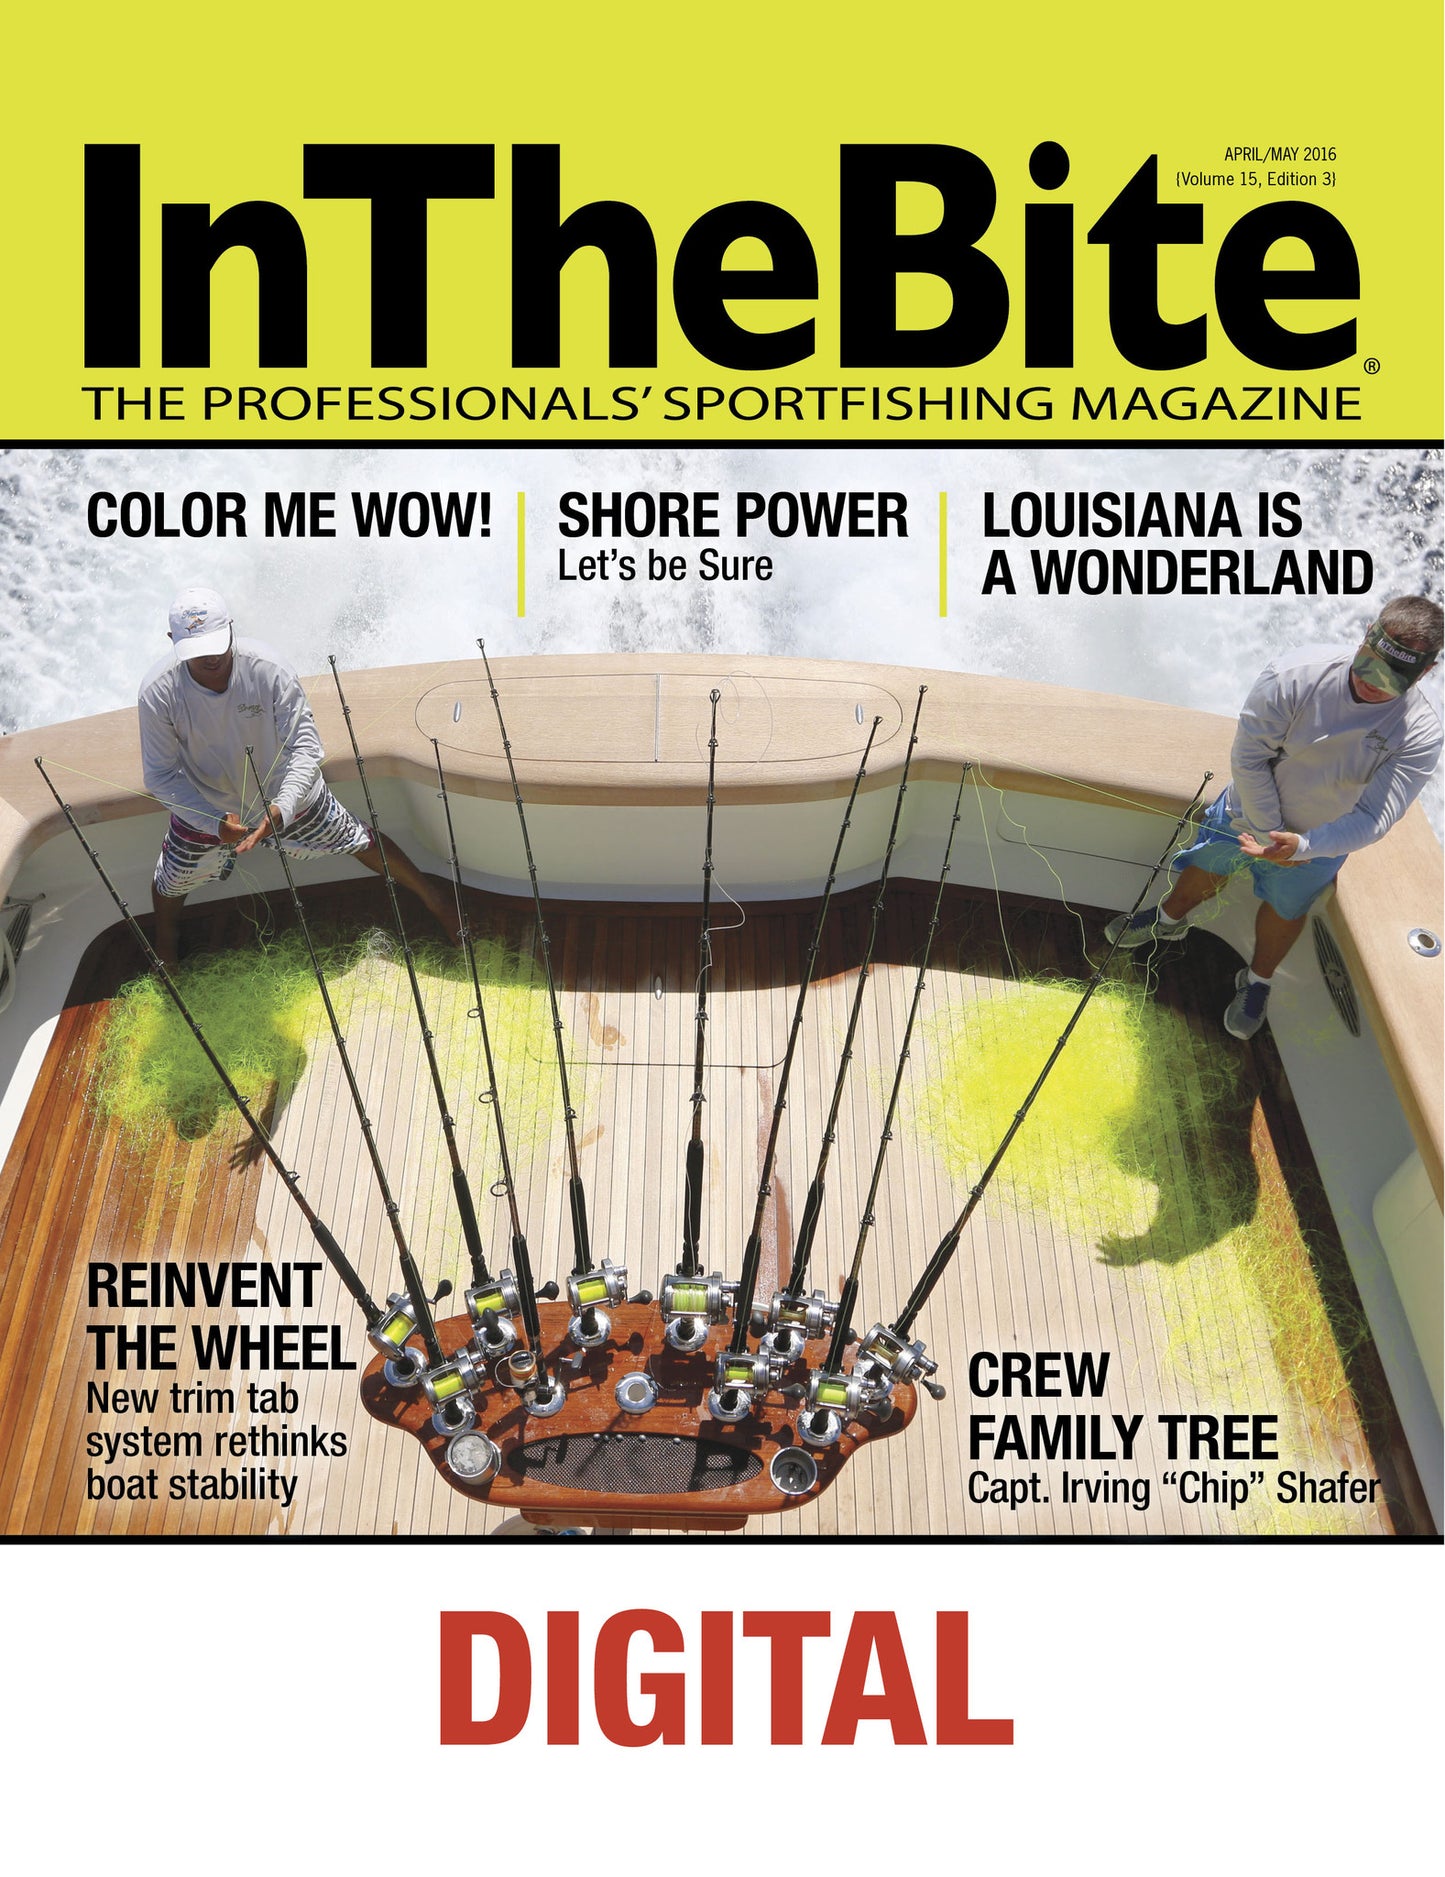 InTheBite Volume 15 Edition 03 April/May 2016 - Digital Edition